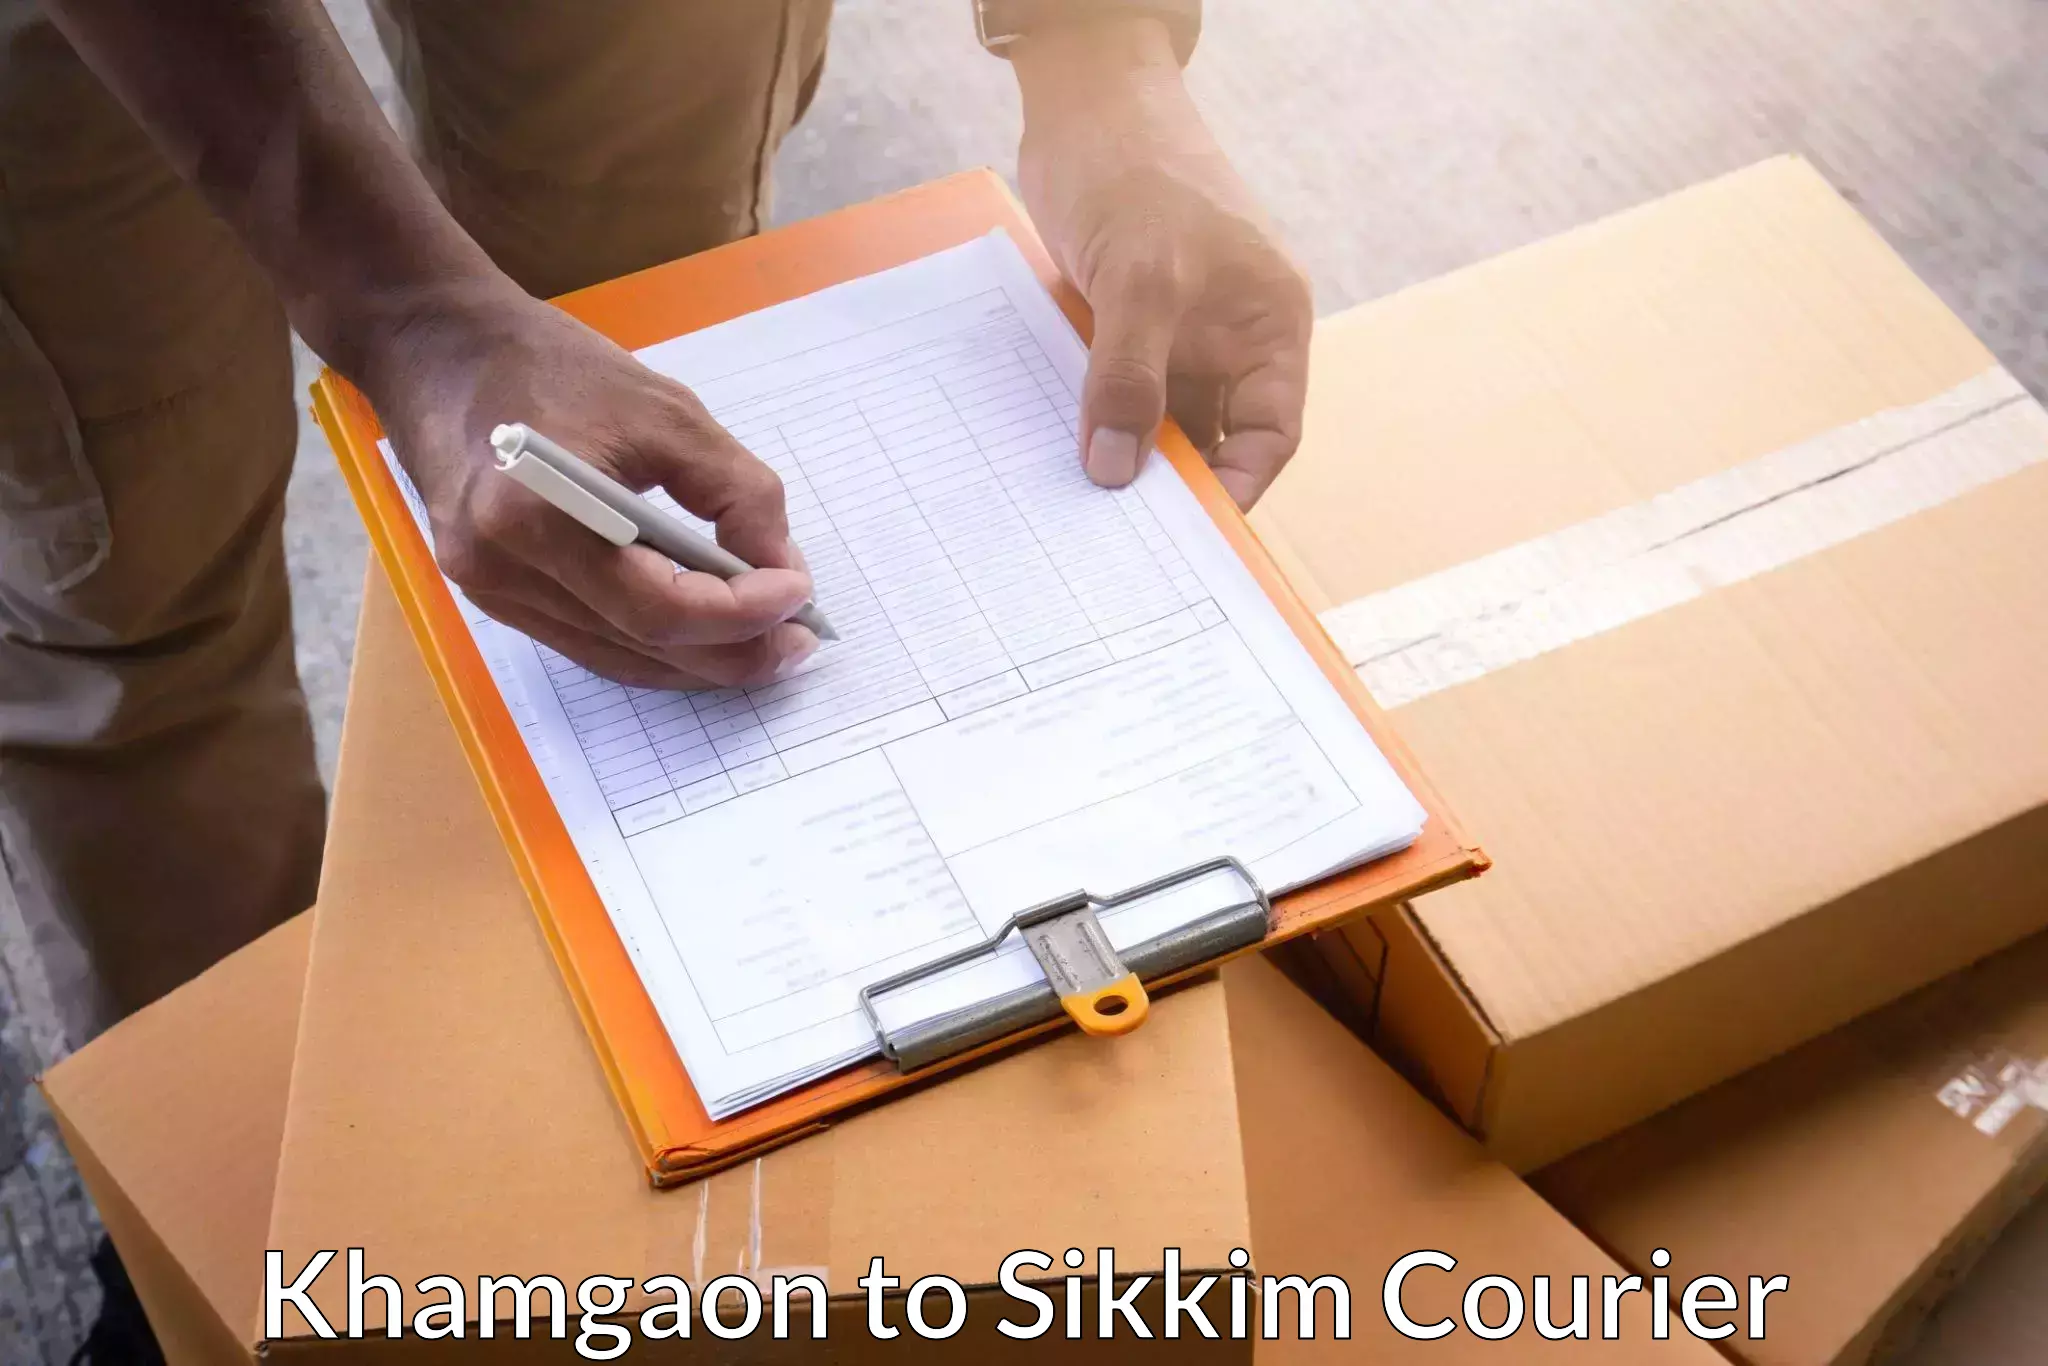 Courier service innovation Khamgaon to East Sikkim